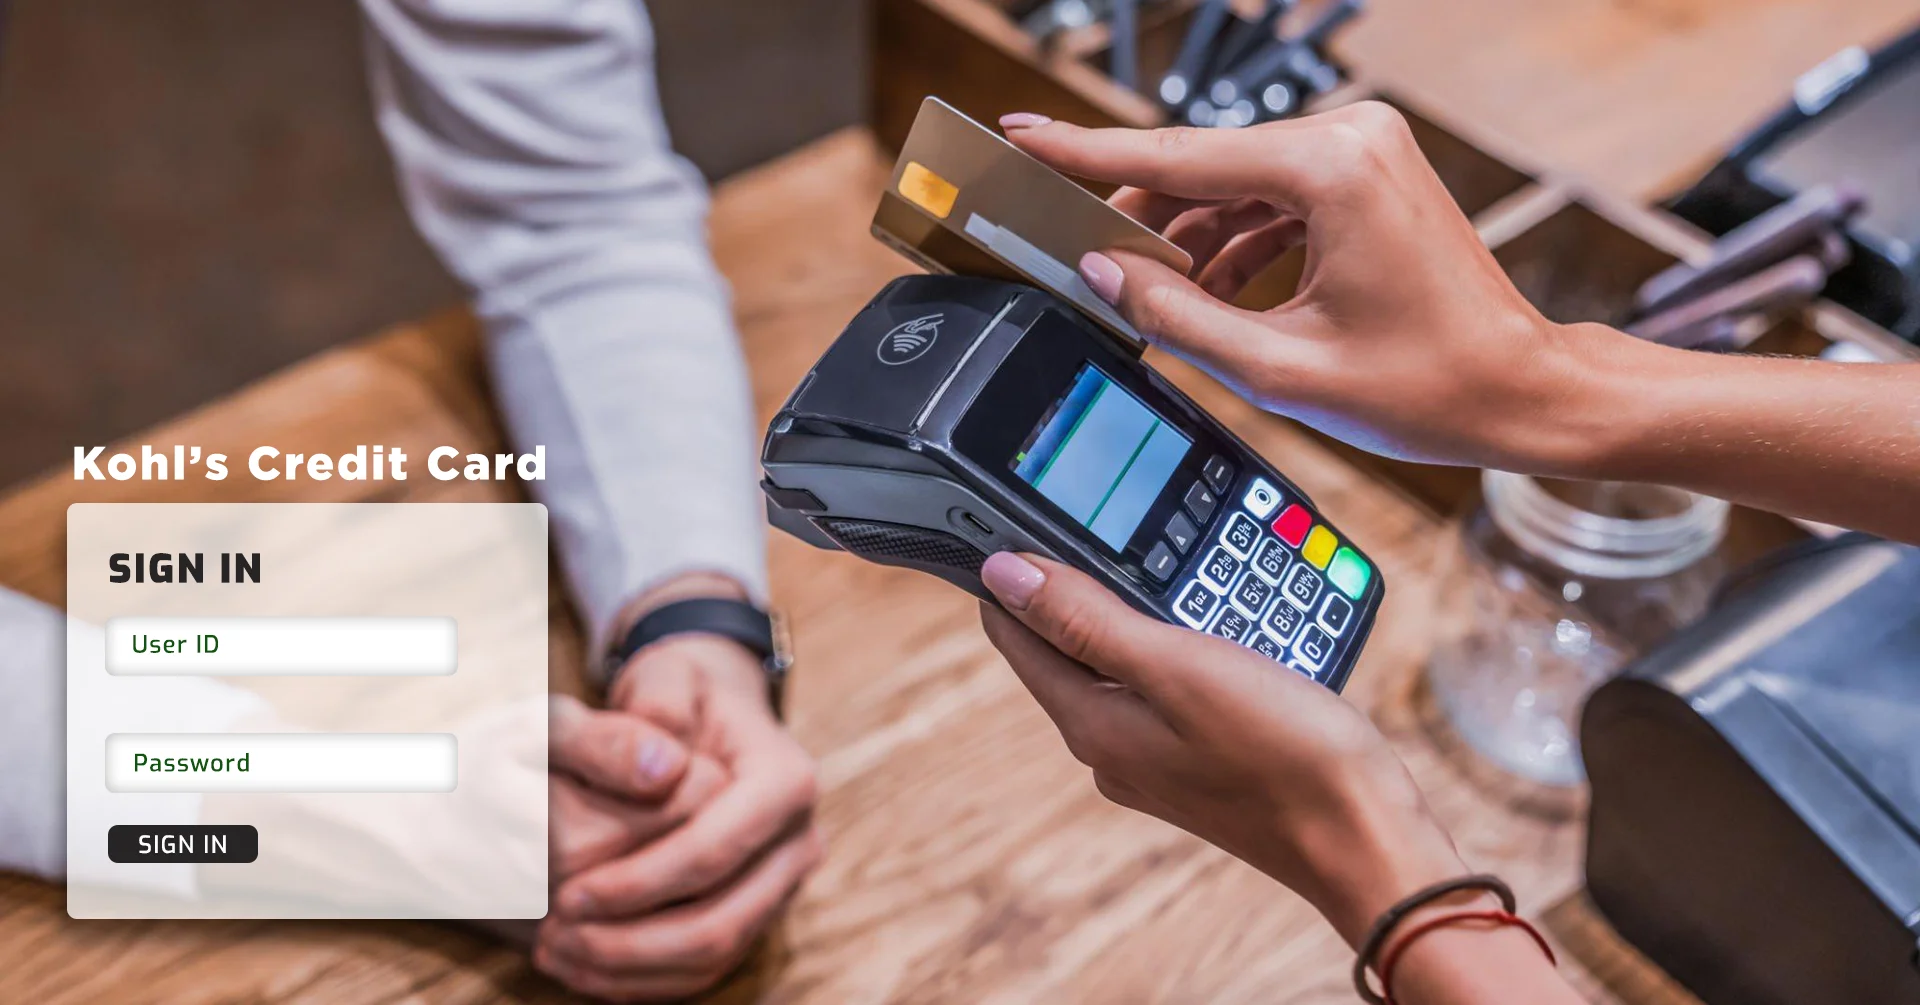 Kohls Credit Card Activation Guide: Unlocking the Benefits